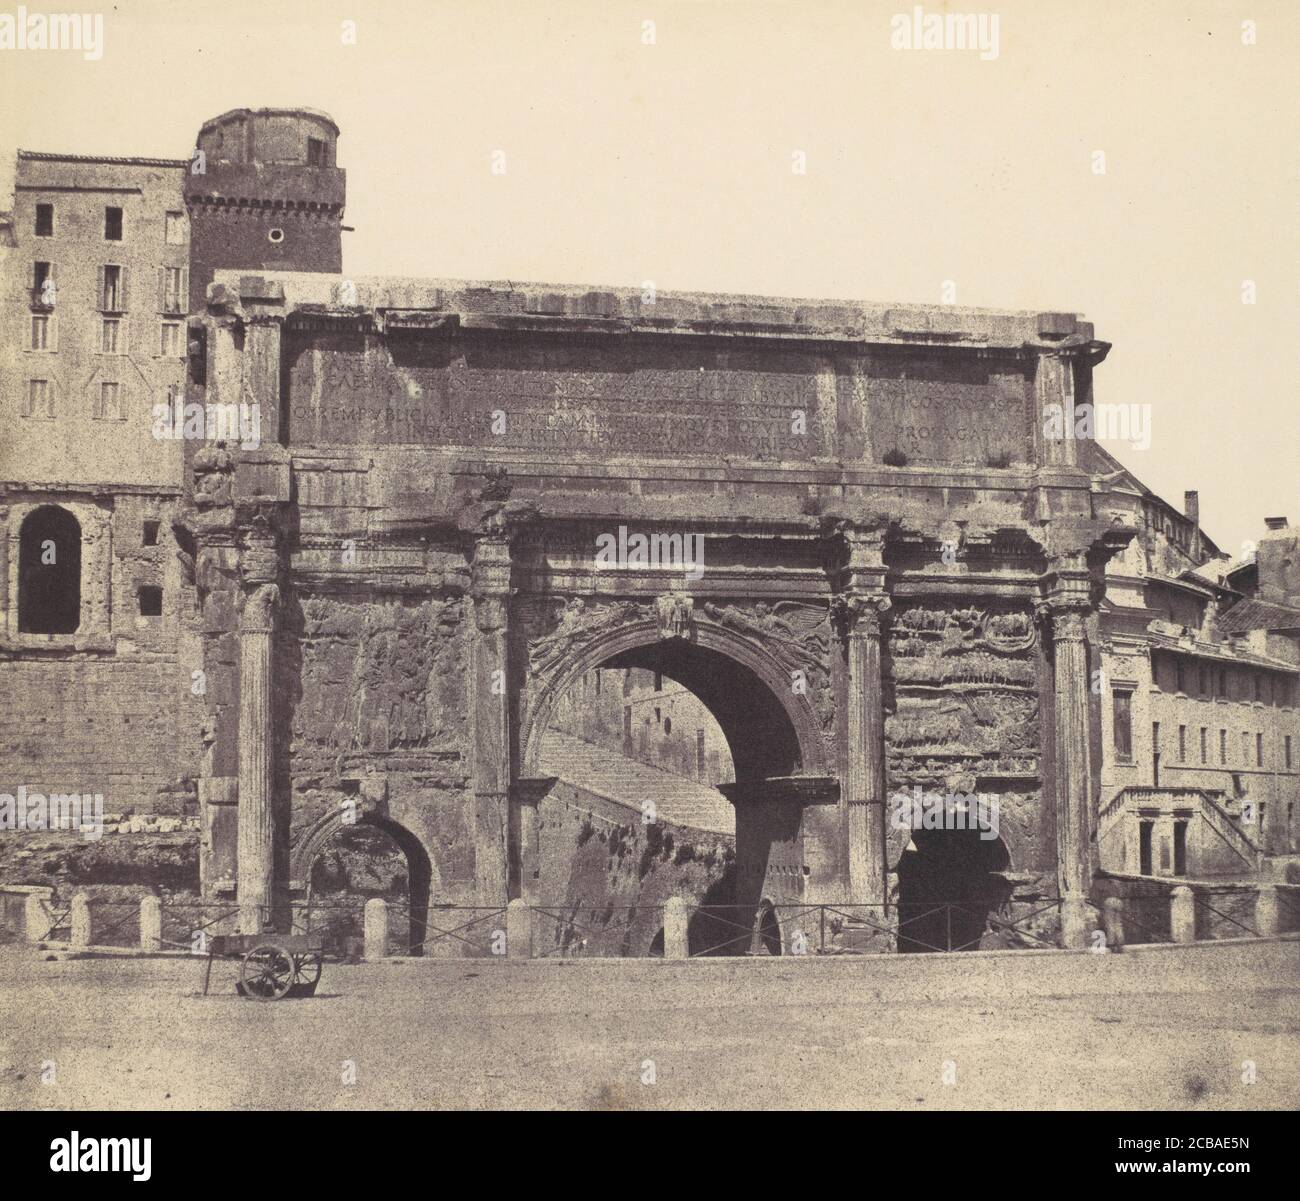 Arch of Septimius Severus, Rome, 1850s Stock Photo - Alamy